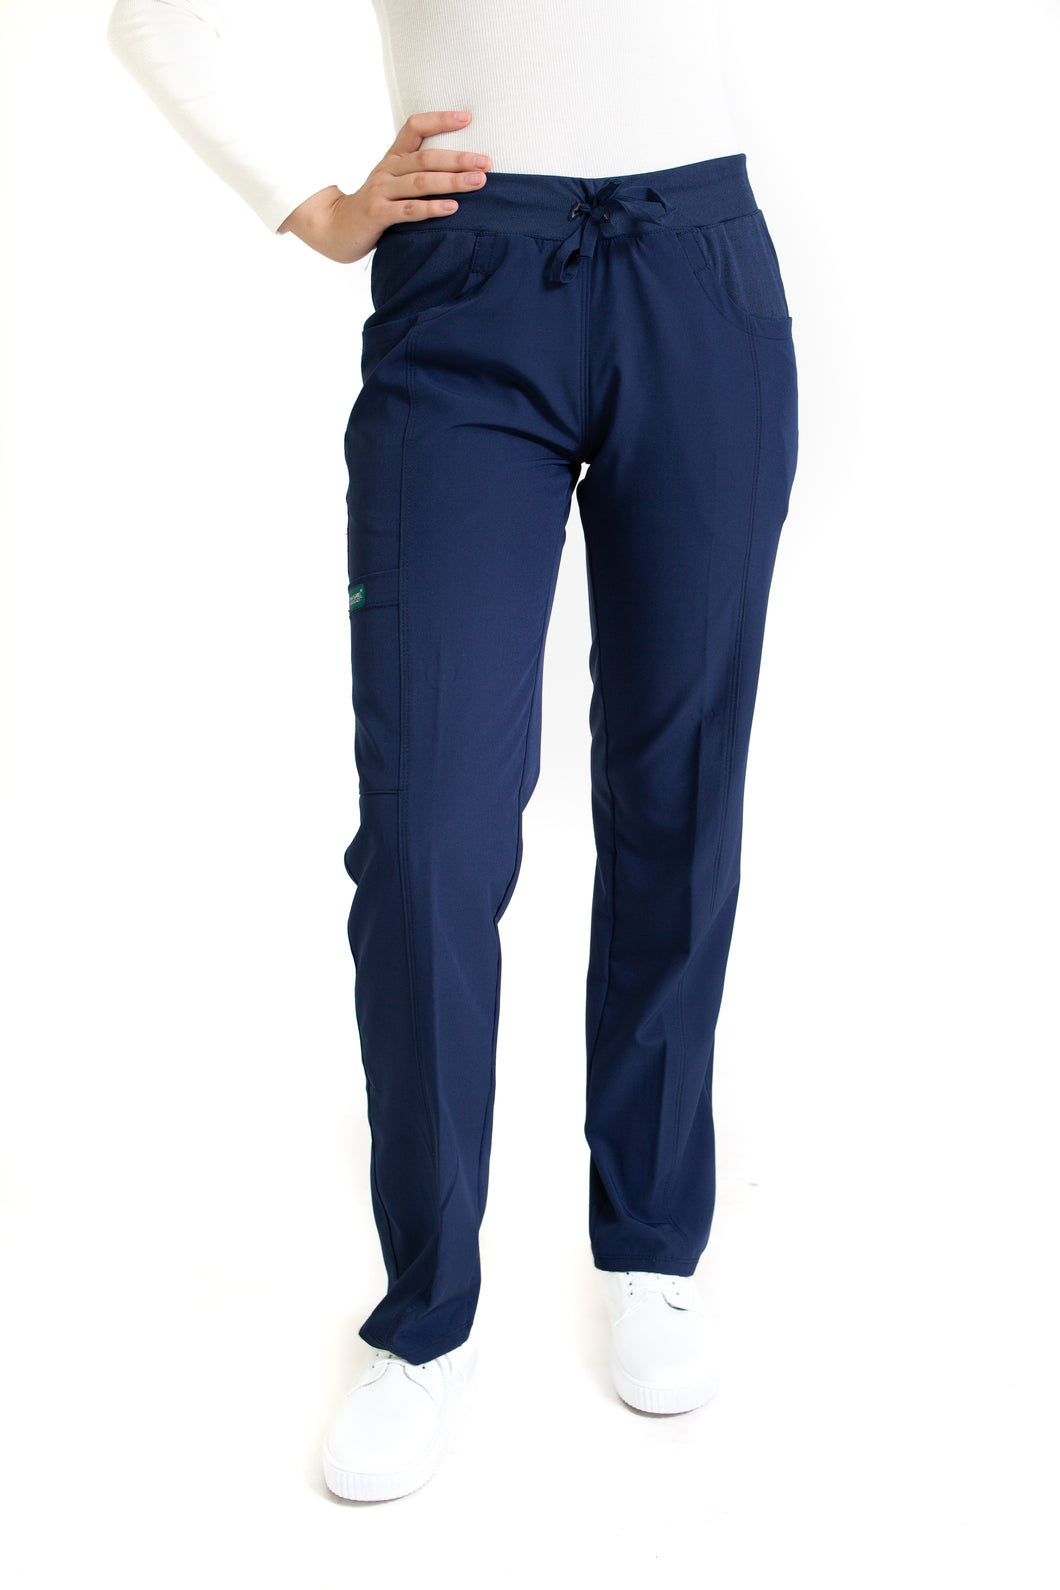 Pantalón Pant EV-120 REPELENTE A FLUIDOS-Color MARINO Dama-Ana Isabel Uniformes